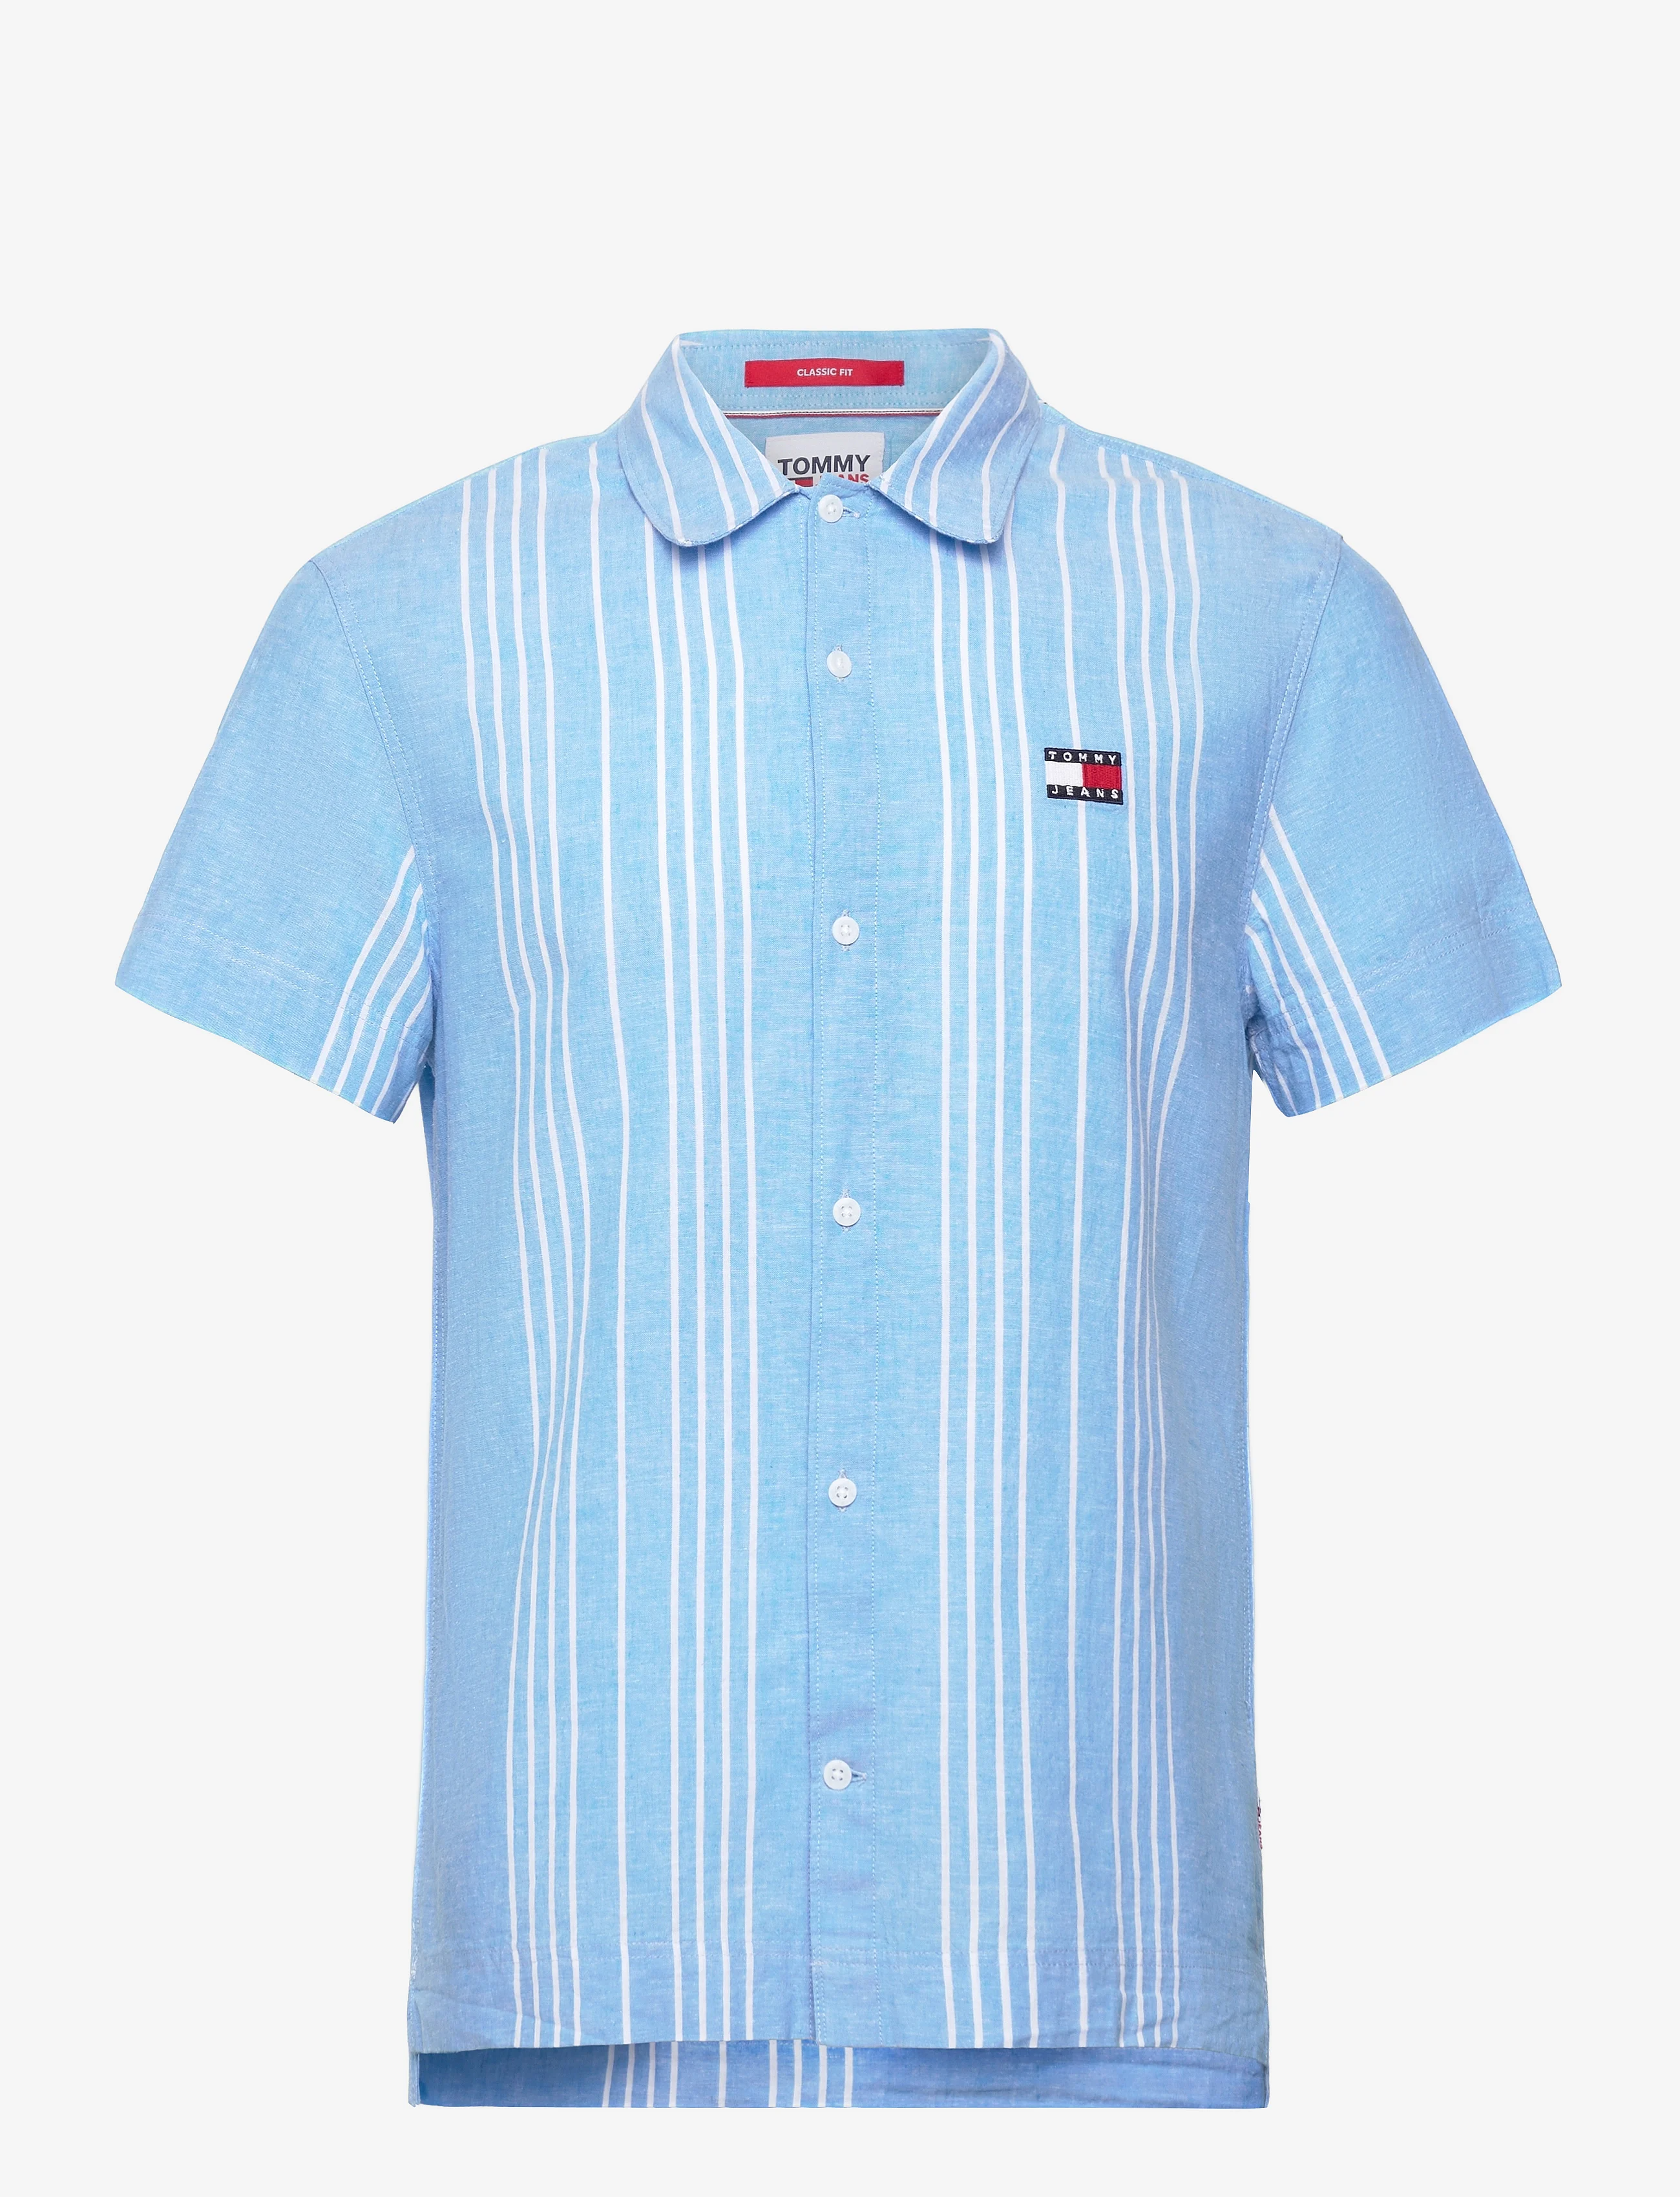 Tommy Hilfiger Skysail/Multi Classic Men\'s Shirt Linen Mini TJM Stripe